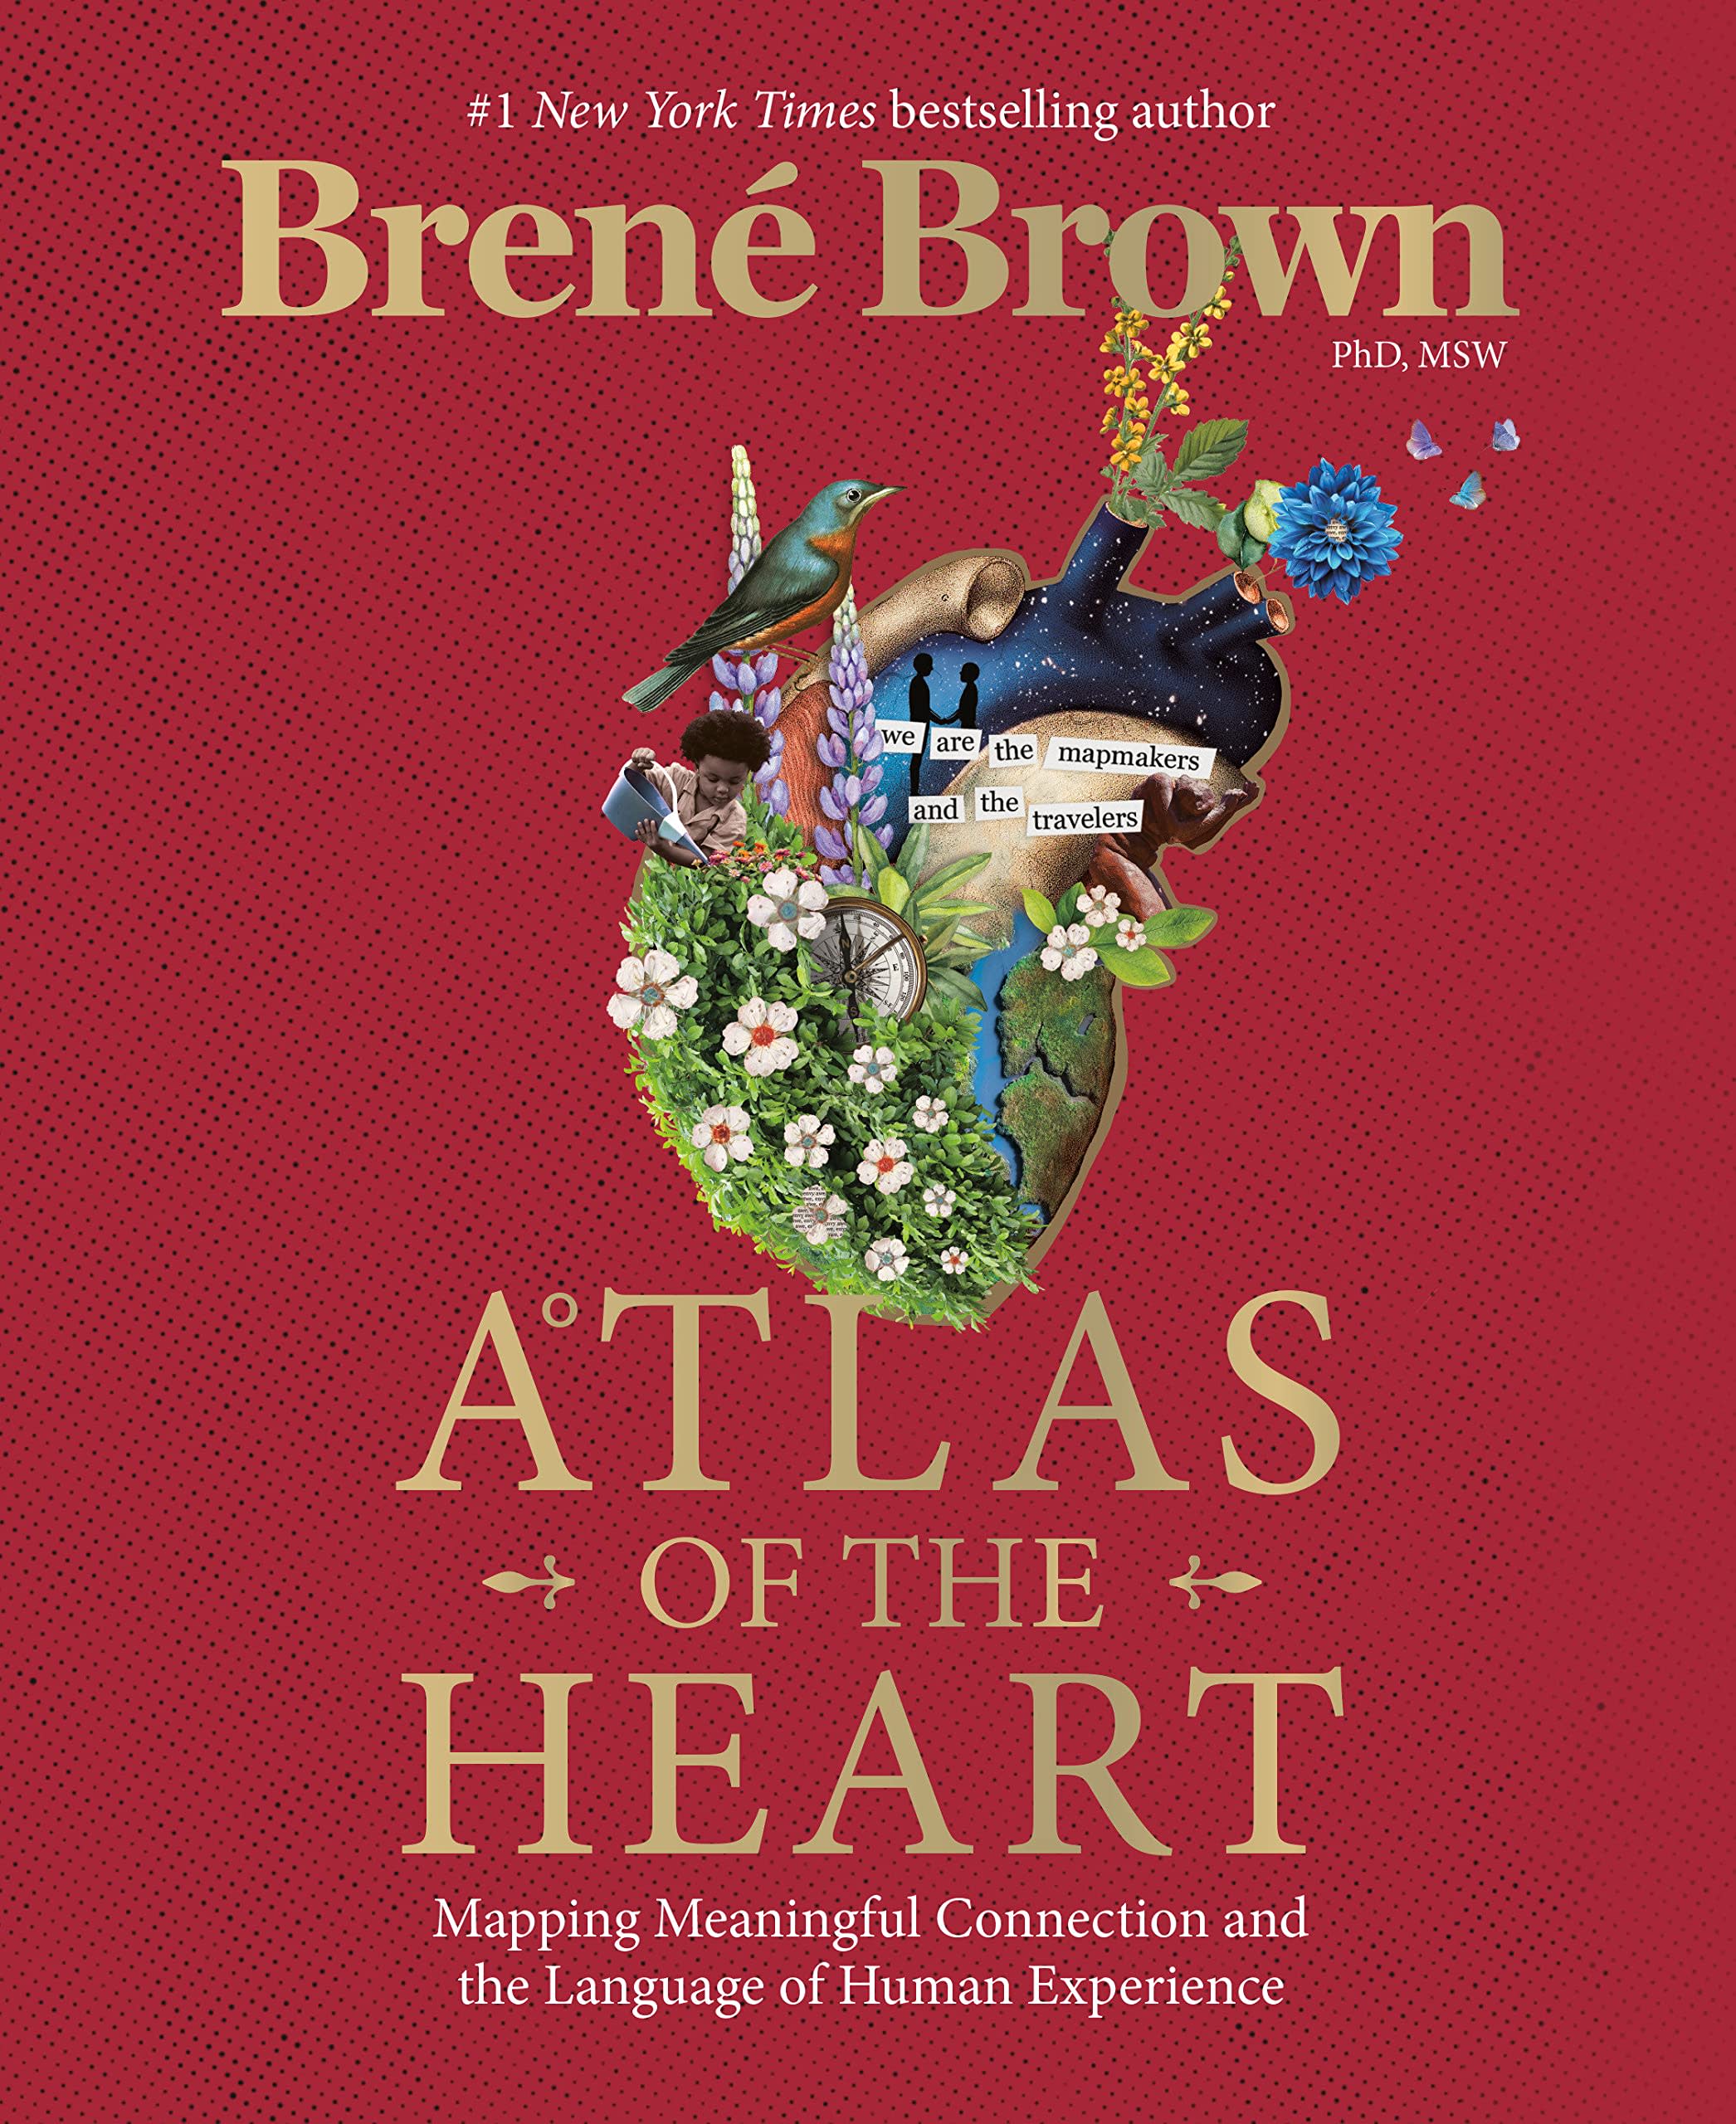 Atlas of the Heart book cover art